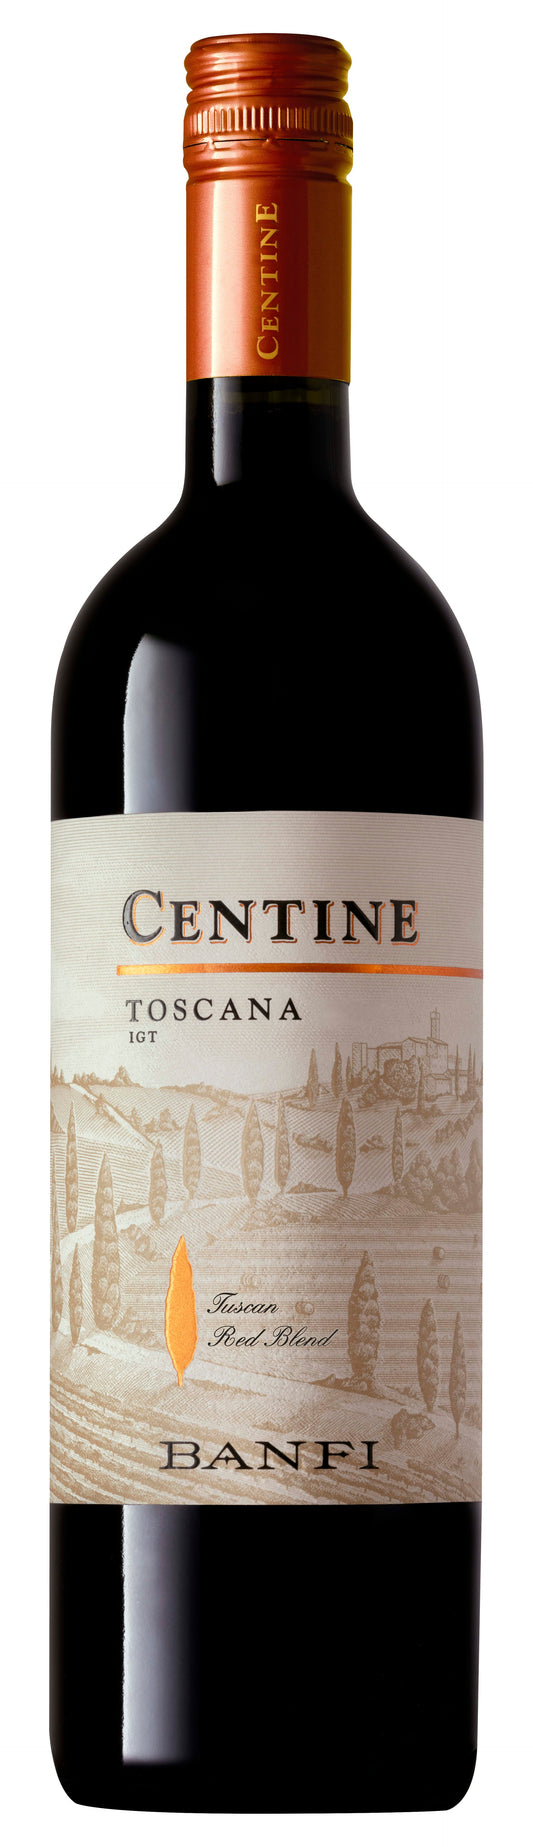 2017 Banfi Centine Toscana Italian Red Wine 750ml